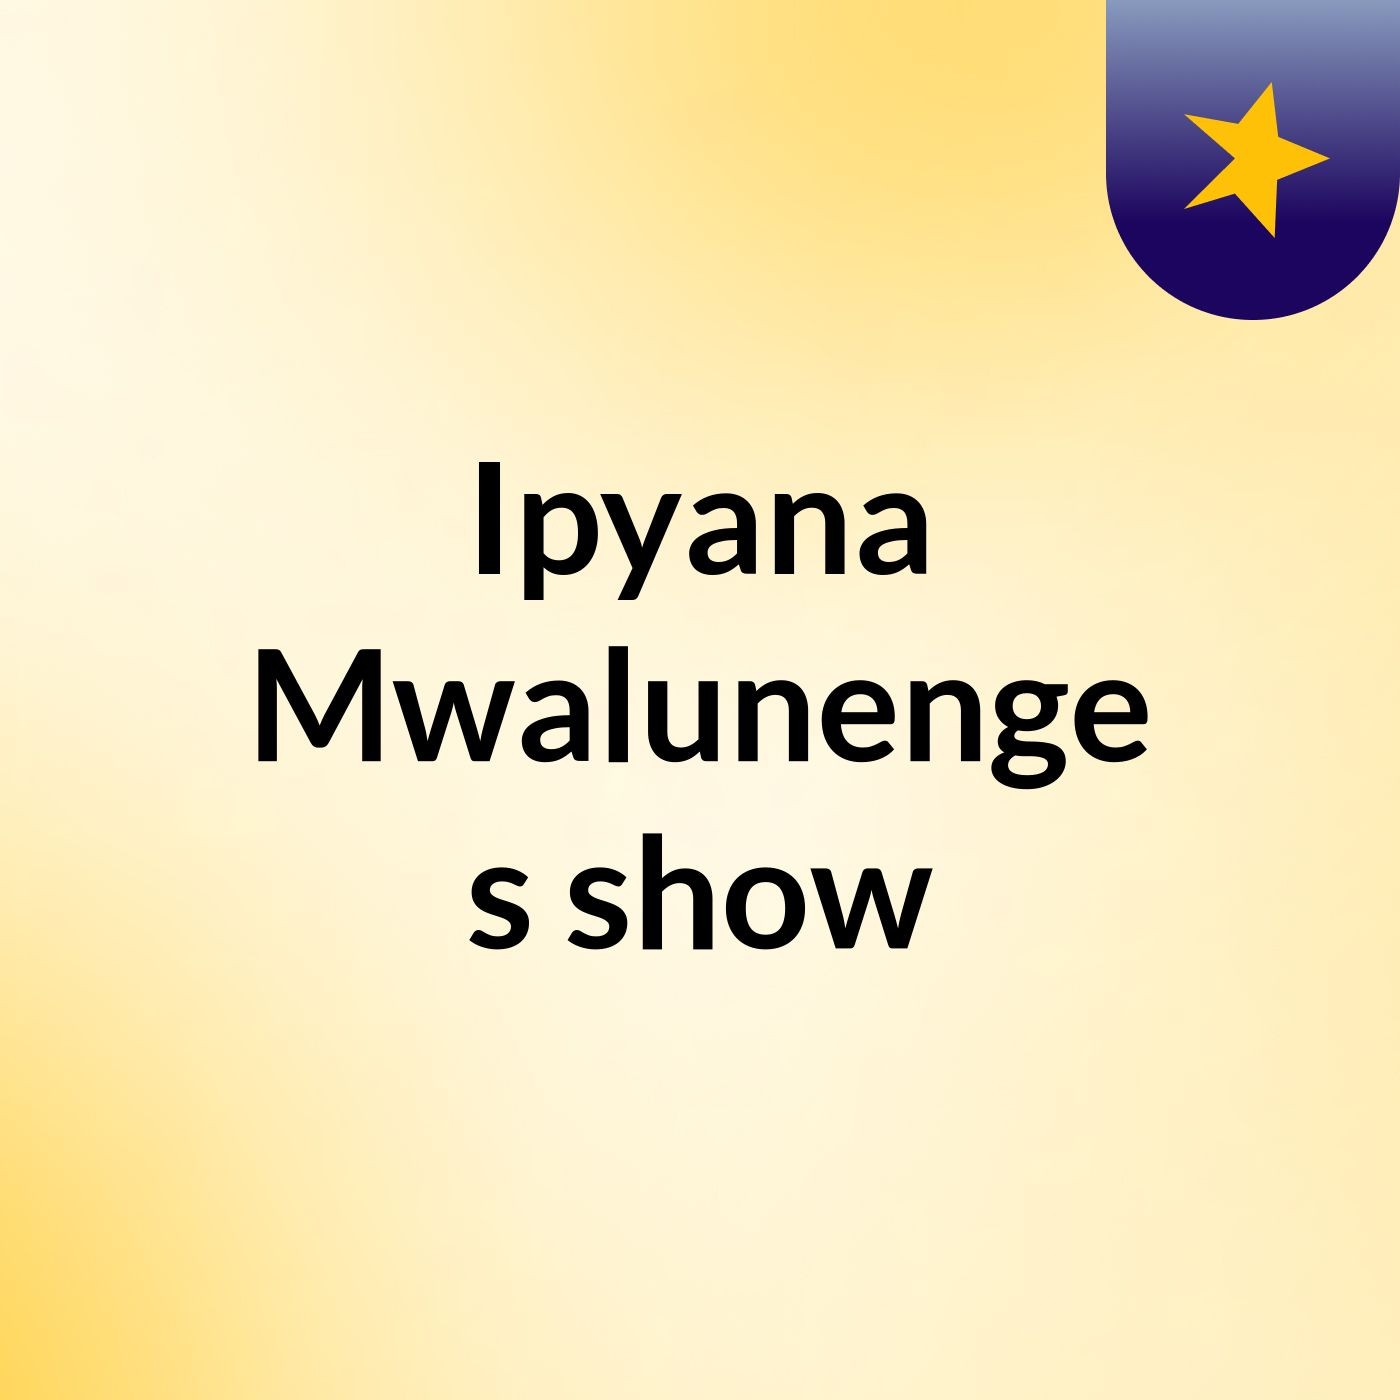 Episode 2 - Ipyana Mwalunenge's show